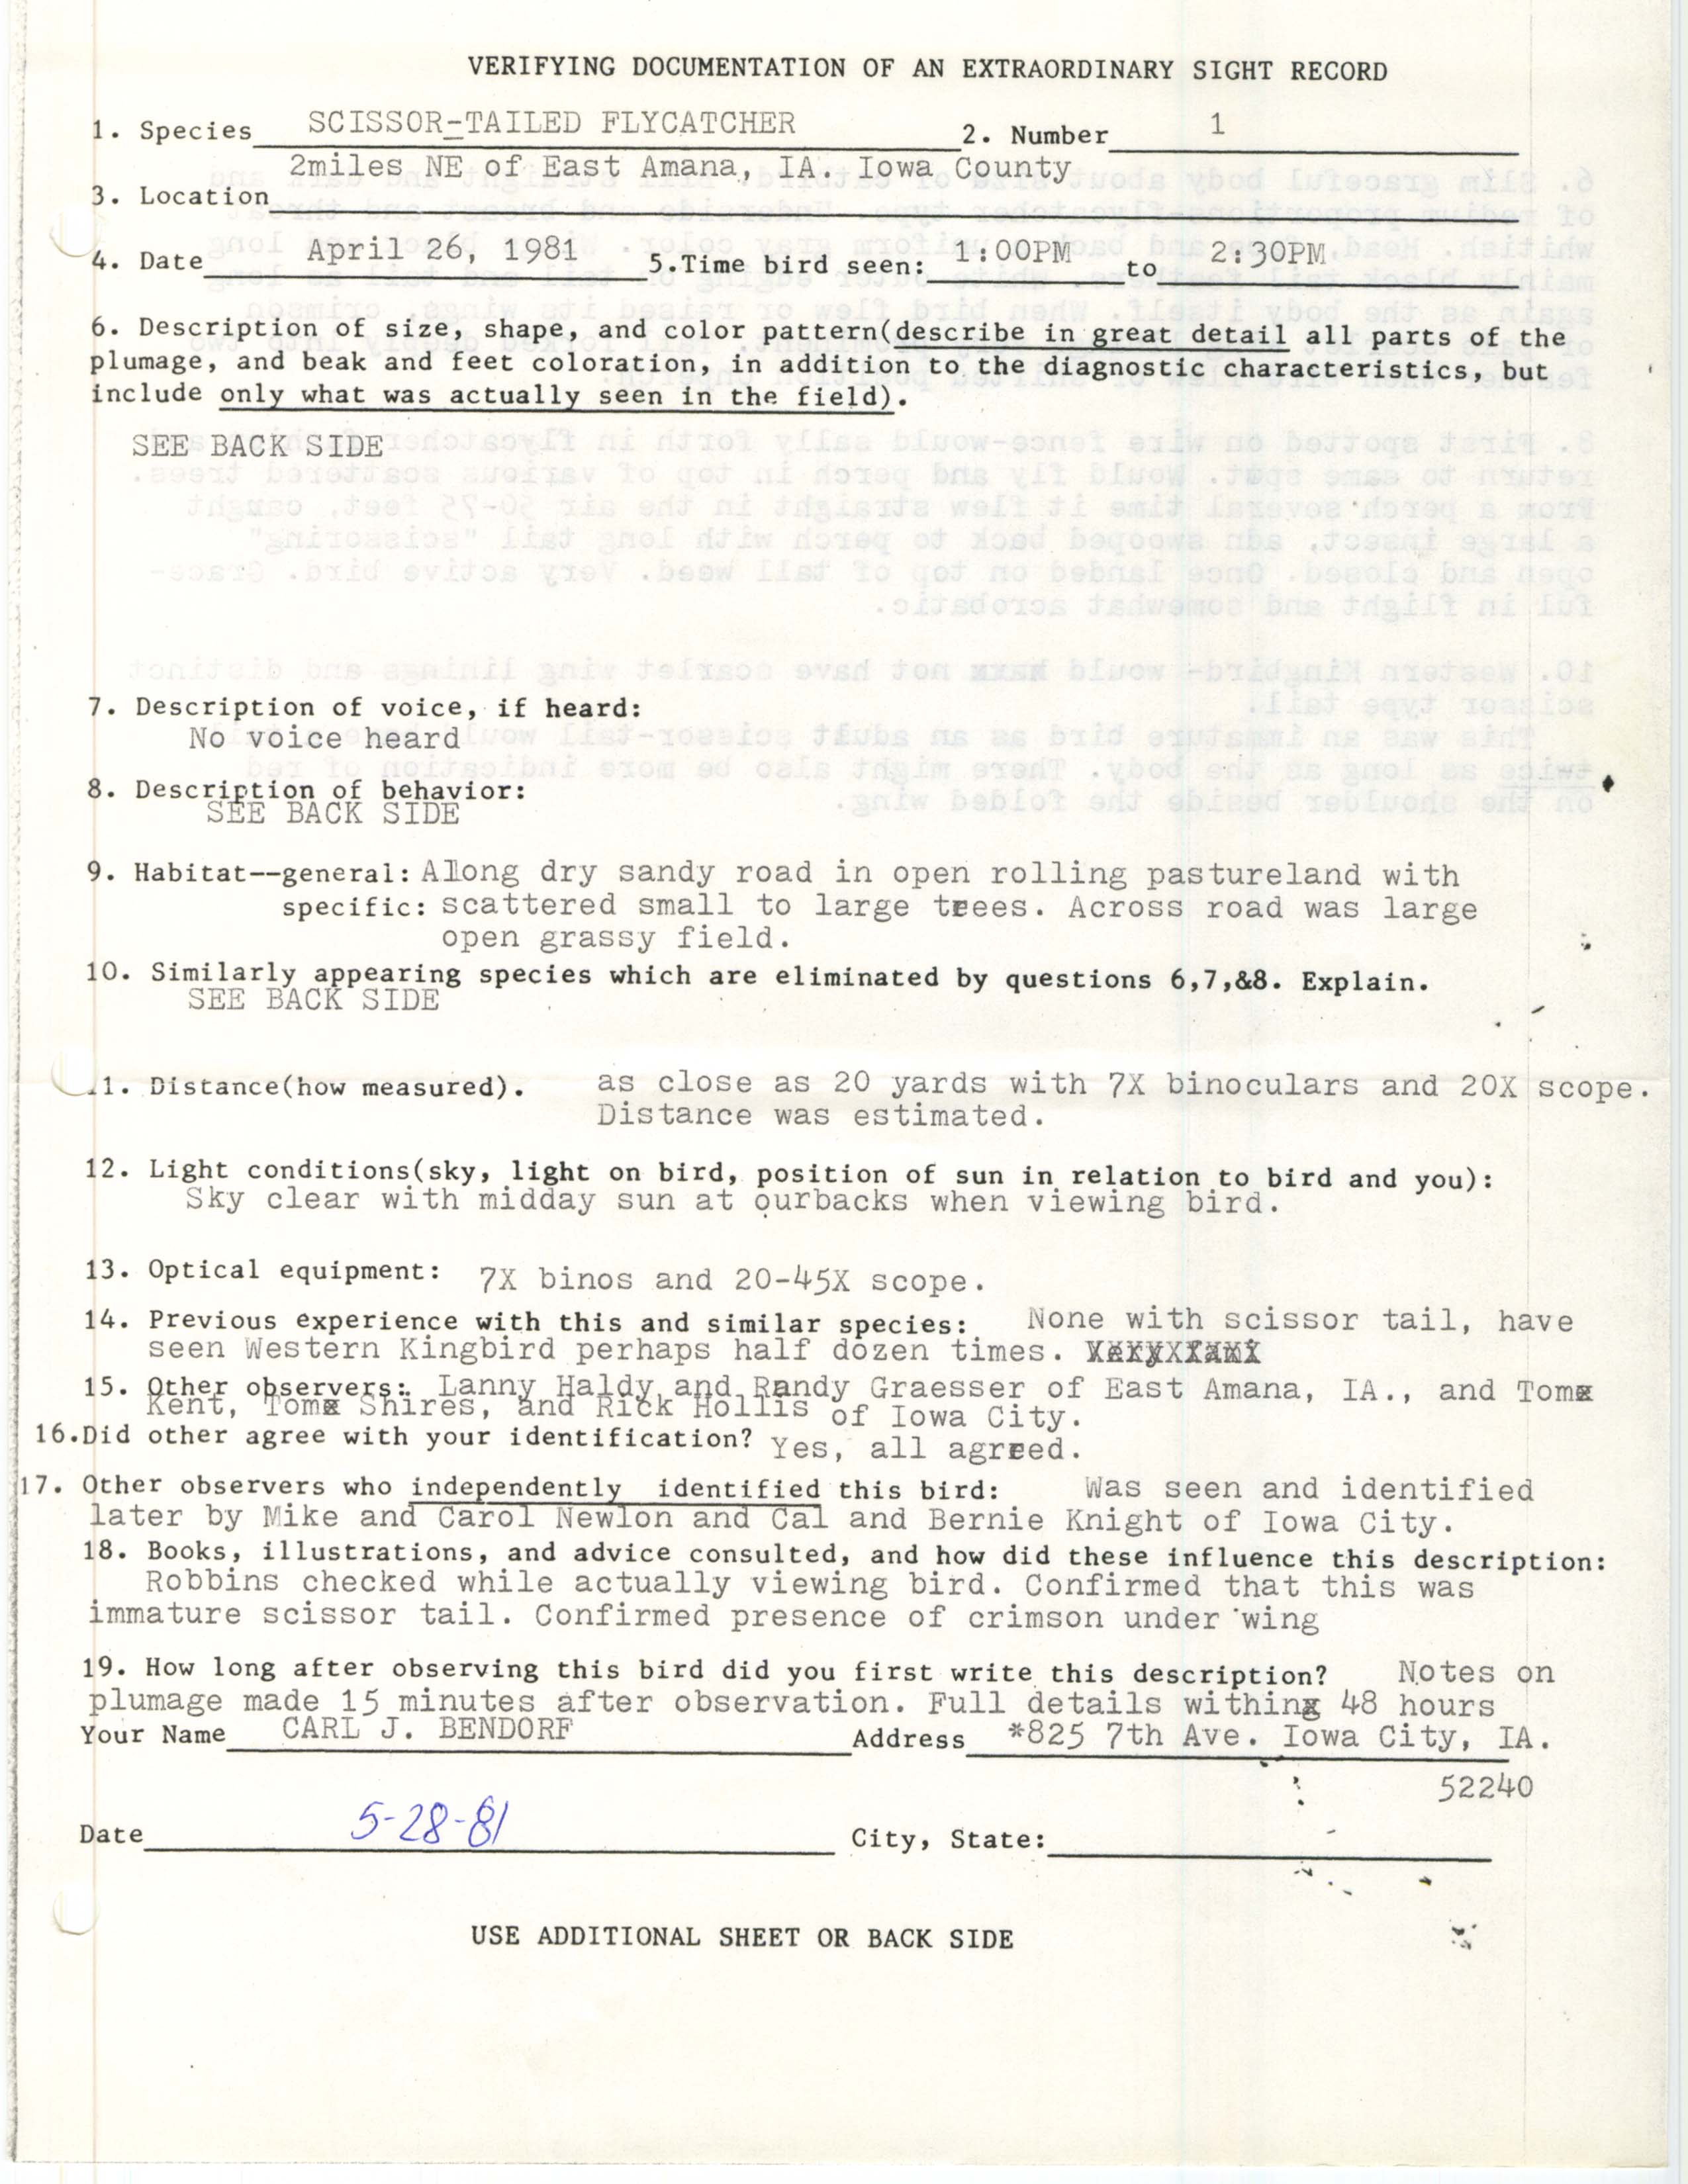 Rare bird documentation form for Scissor-tailed Flycatcher northeast of East Amana, 1981